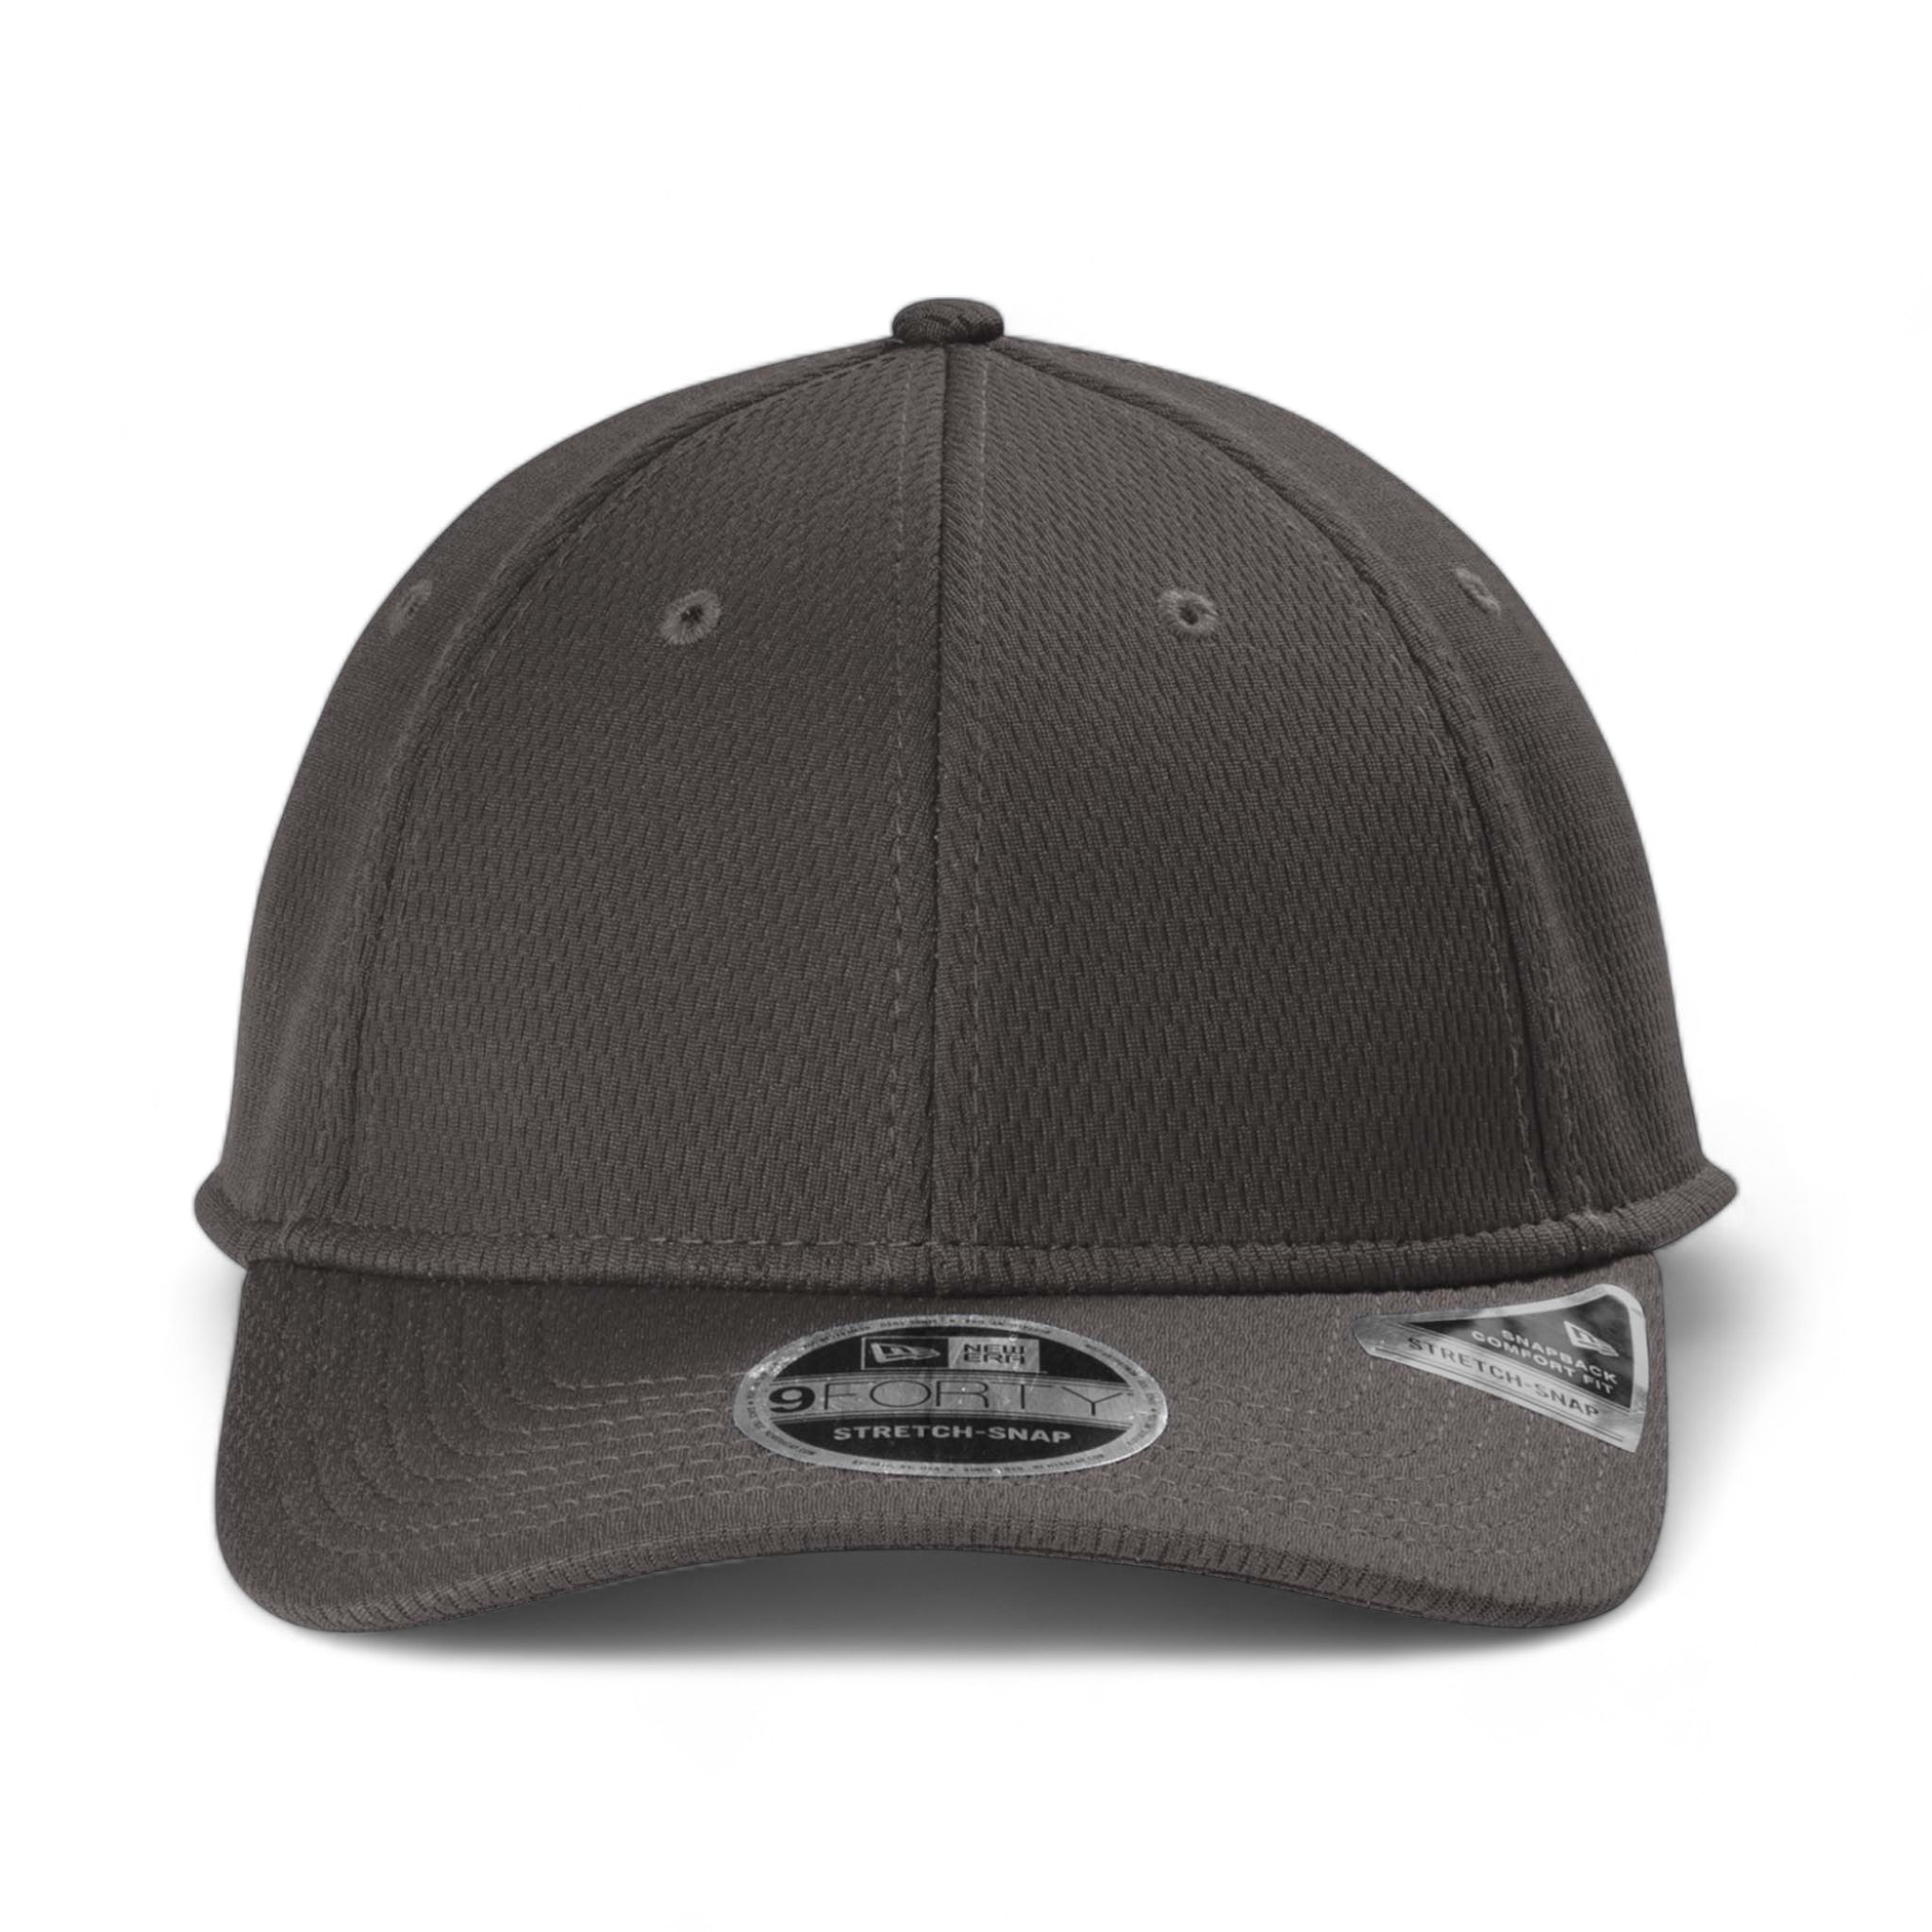 Front view of New Era NE209 custom hat in graphite